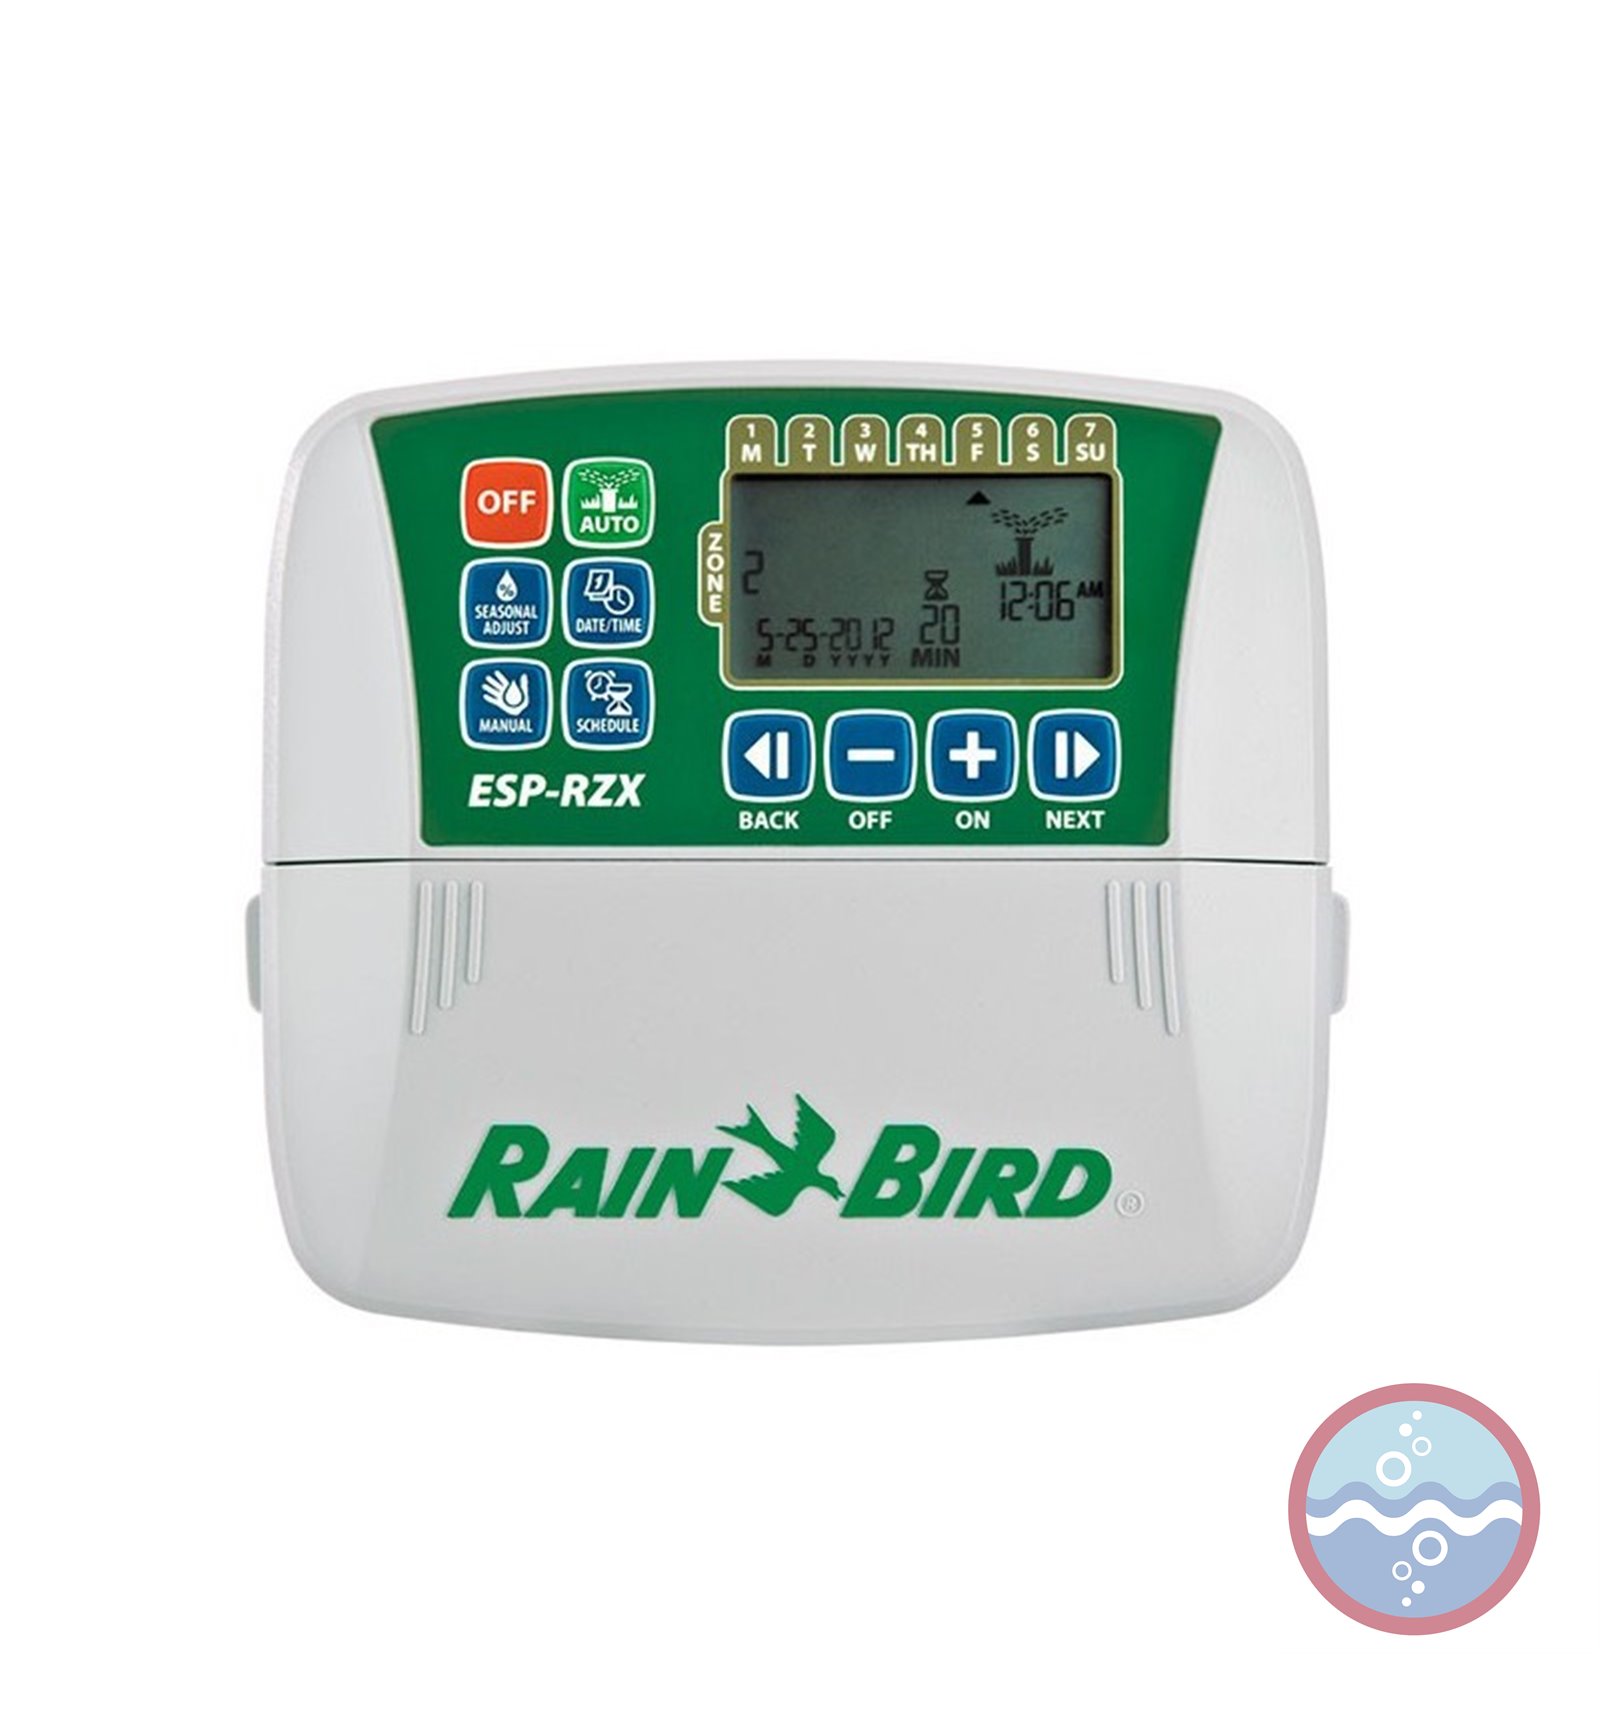 Programador de riego ESP-TM2 de 12 estaciones outdoor apto Wifi RAIN BIRD